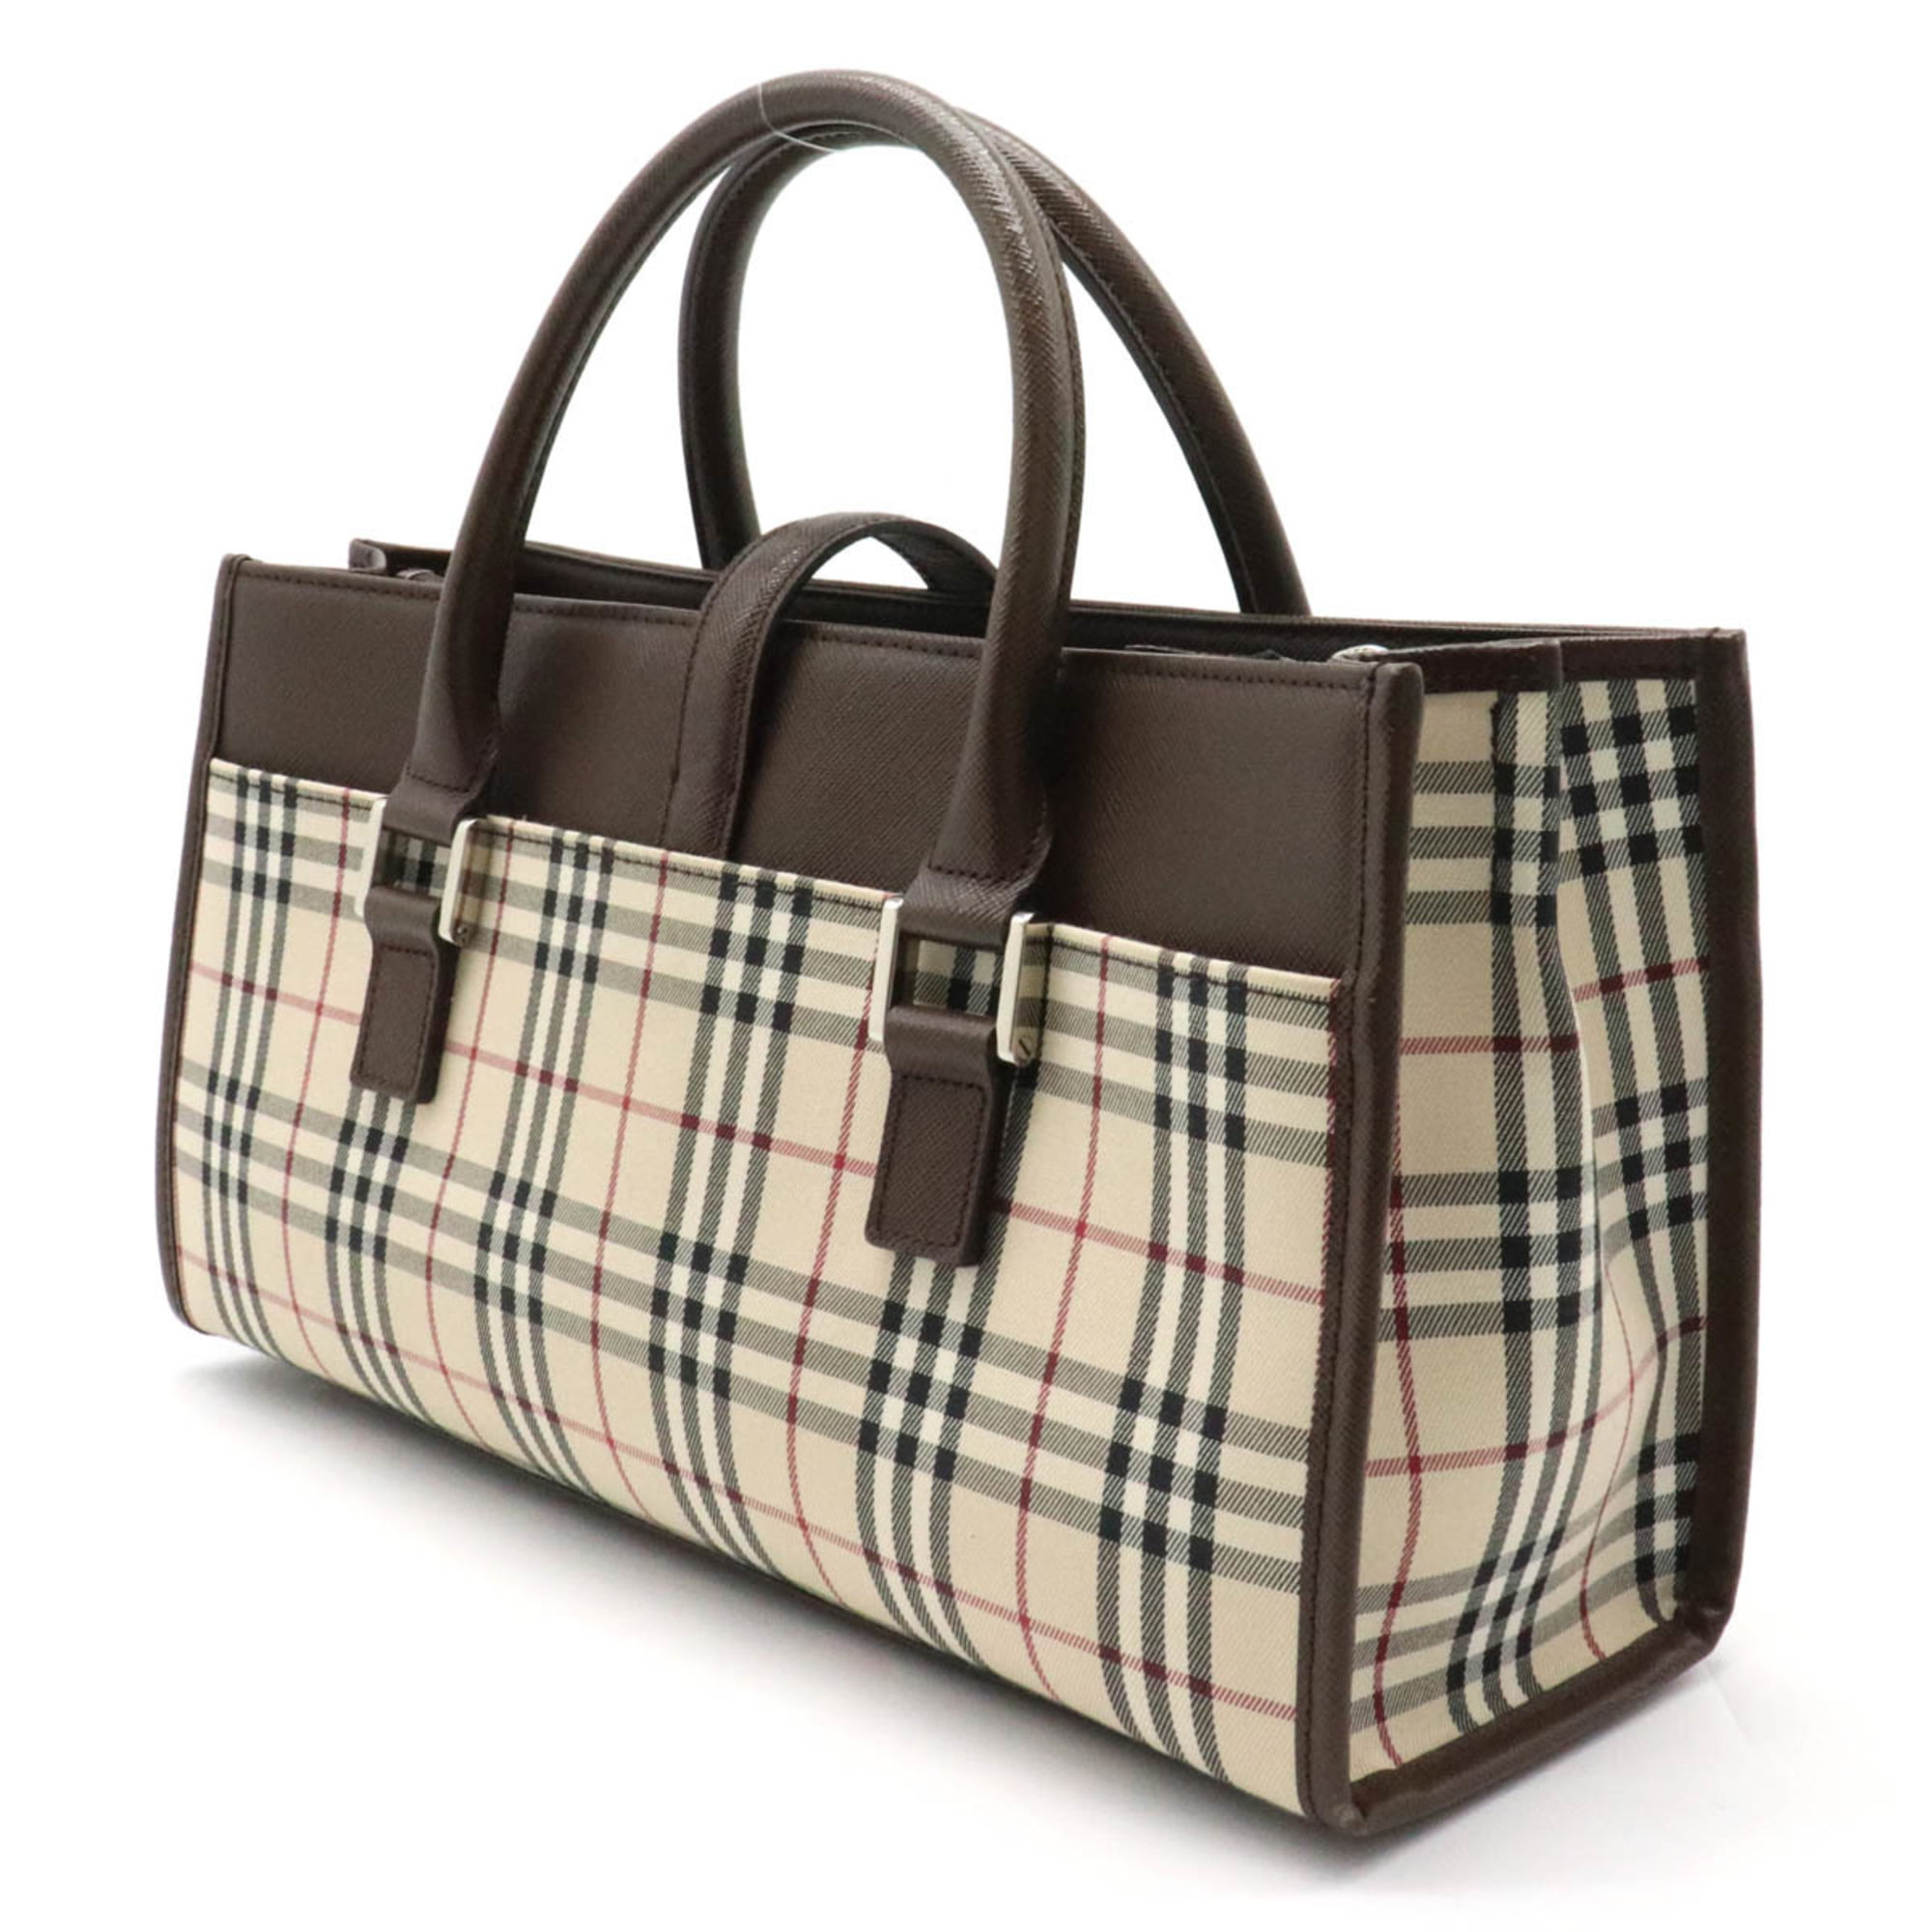 Authenticated Used BagBURBERRY Burberry Nova Check Plaid Handbag Tote Bag  Canvas Leather Beige Dark Brown 